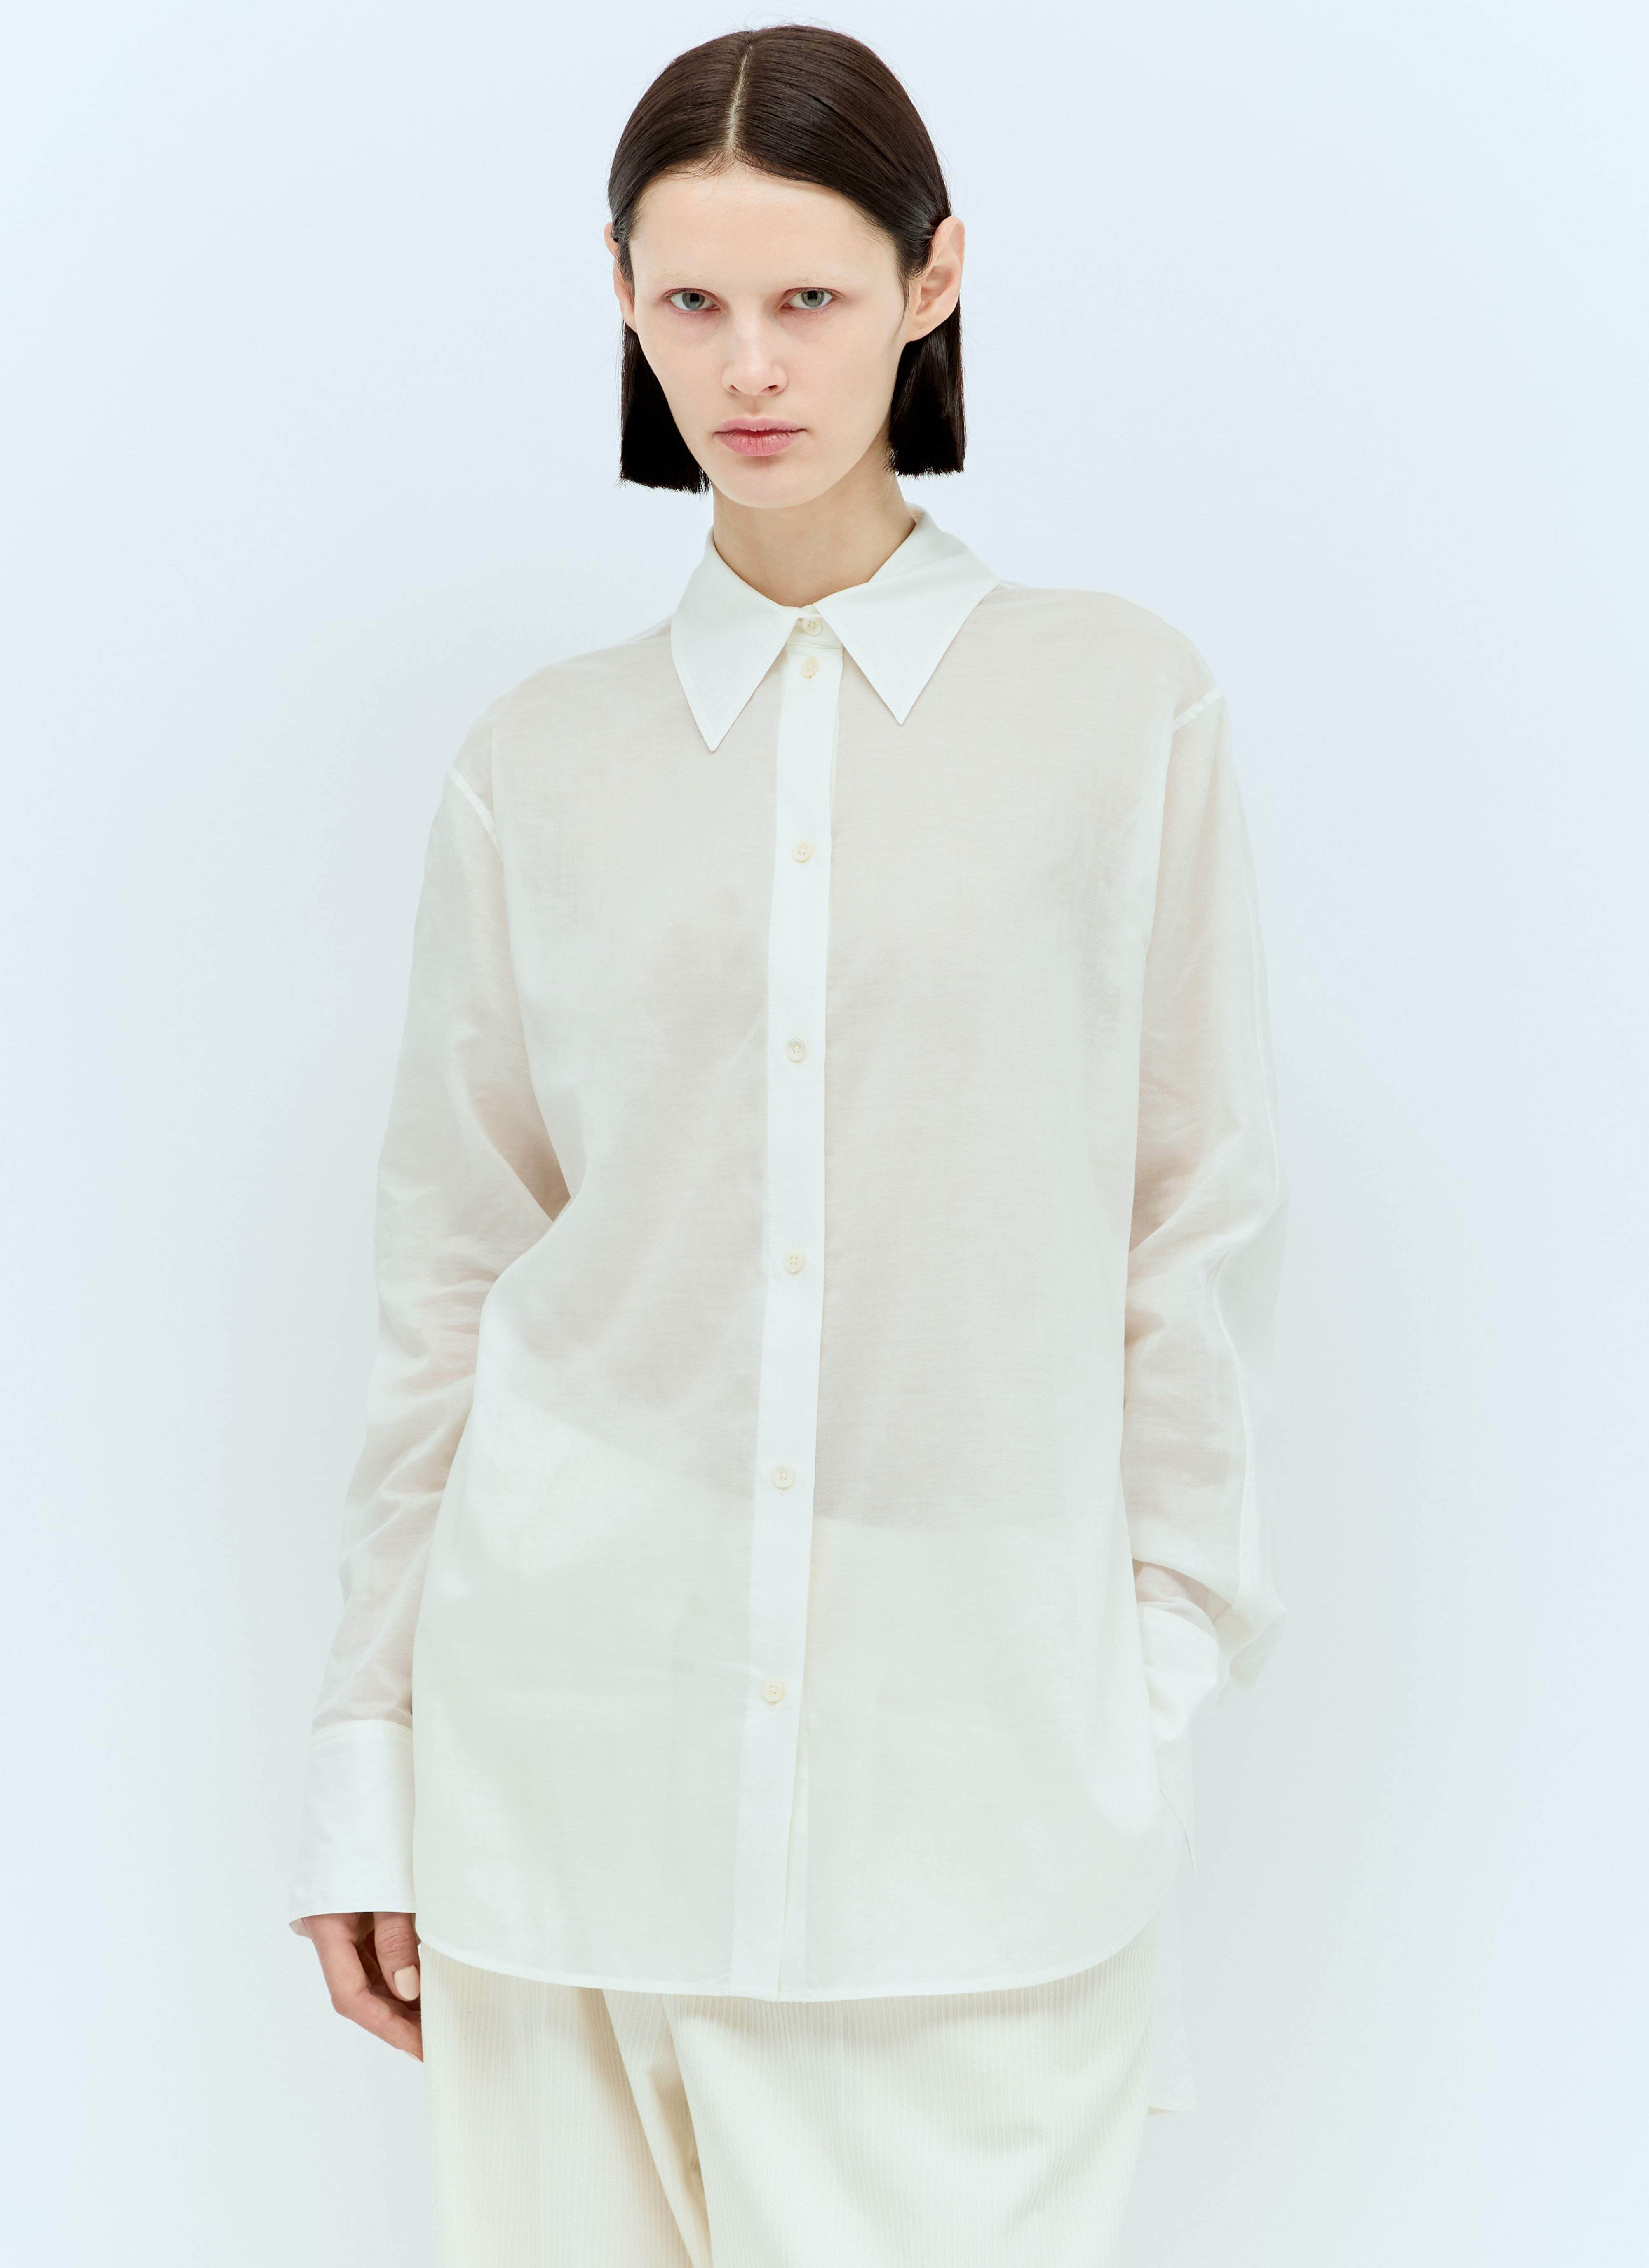 Jean Paul Gaultier x Shayne Oliver Kimono-Sleeve Shirt Black jps0257004